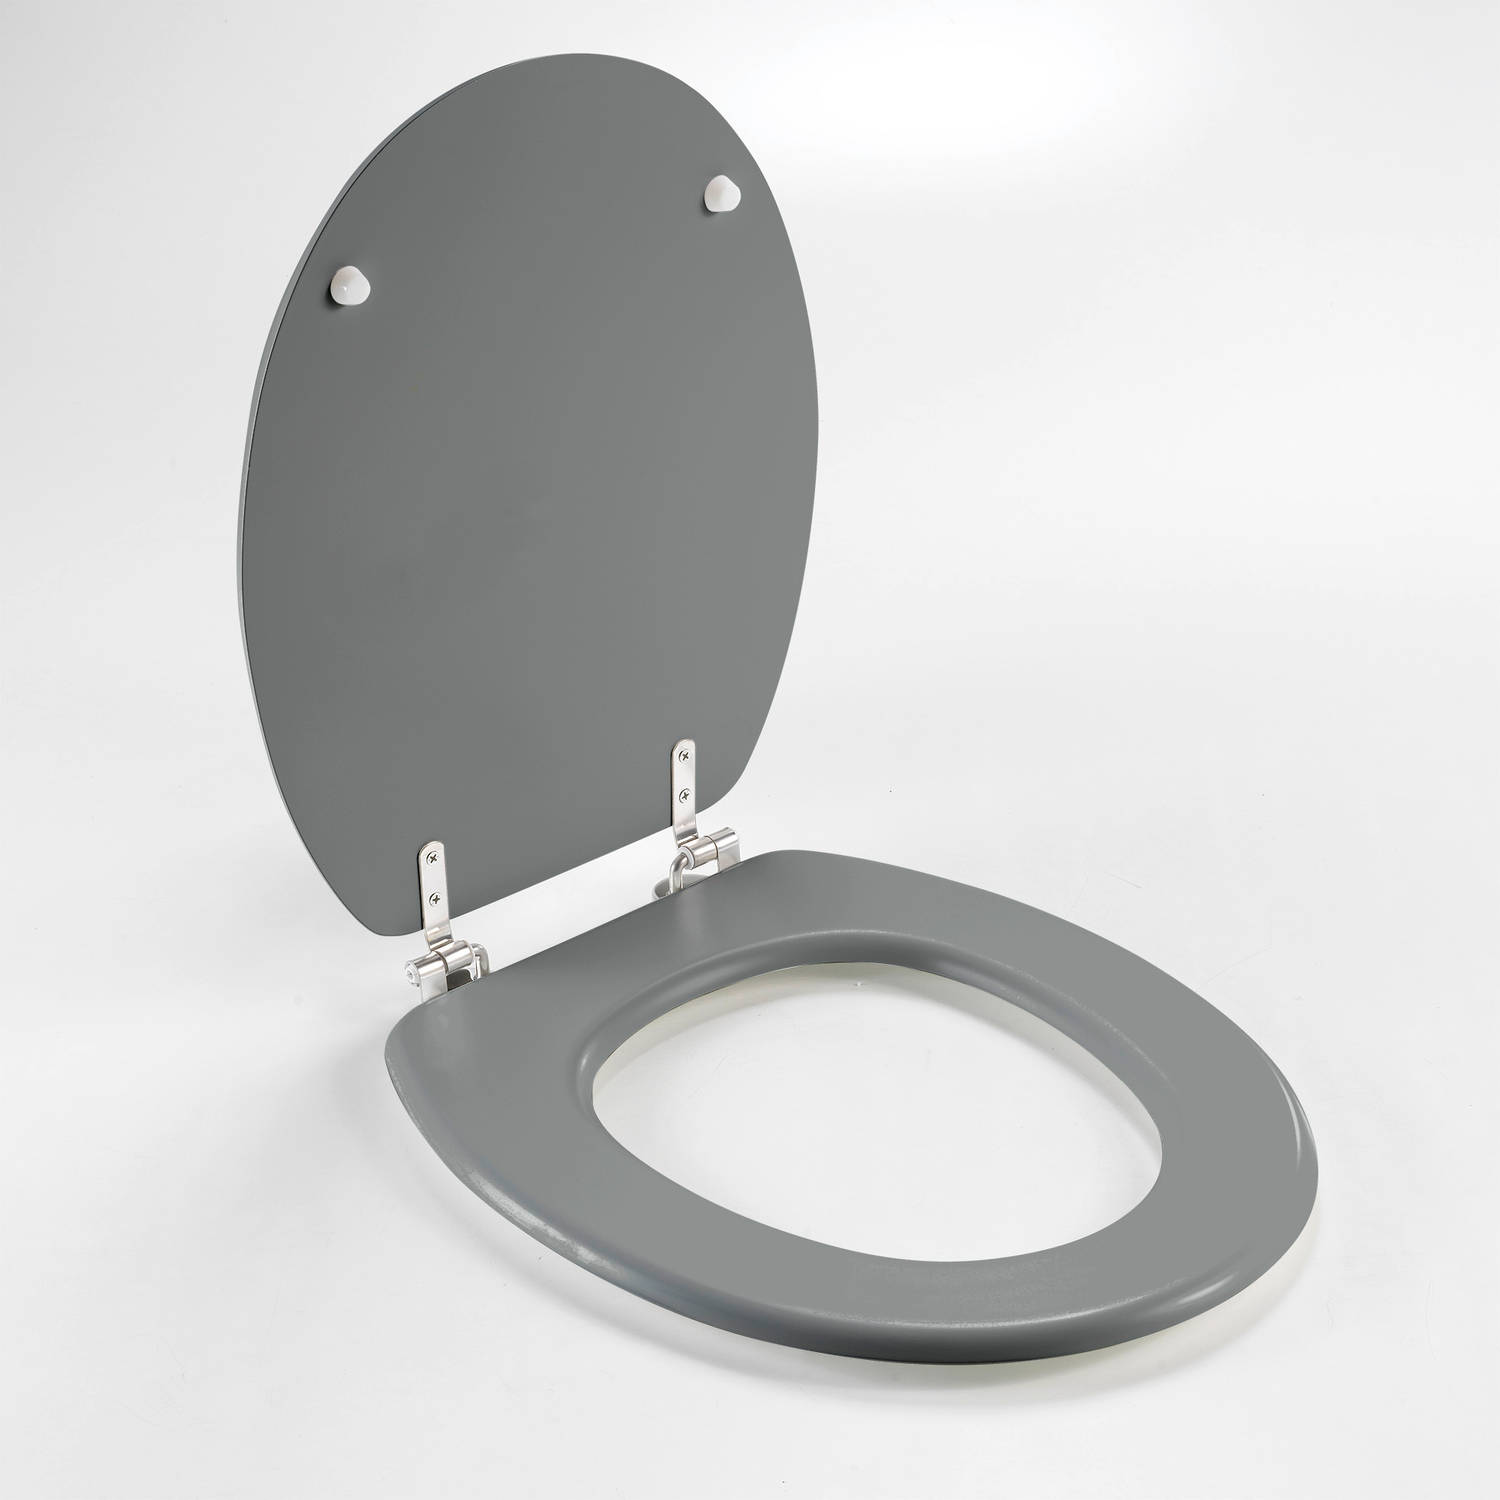 Wicotex-Toiletbril-WC bril MDF-Hout mat grijs inclusief metallic scharnieren.